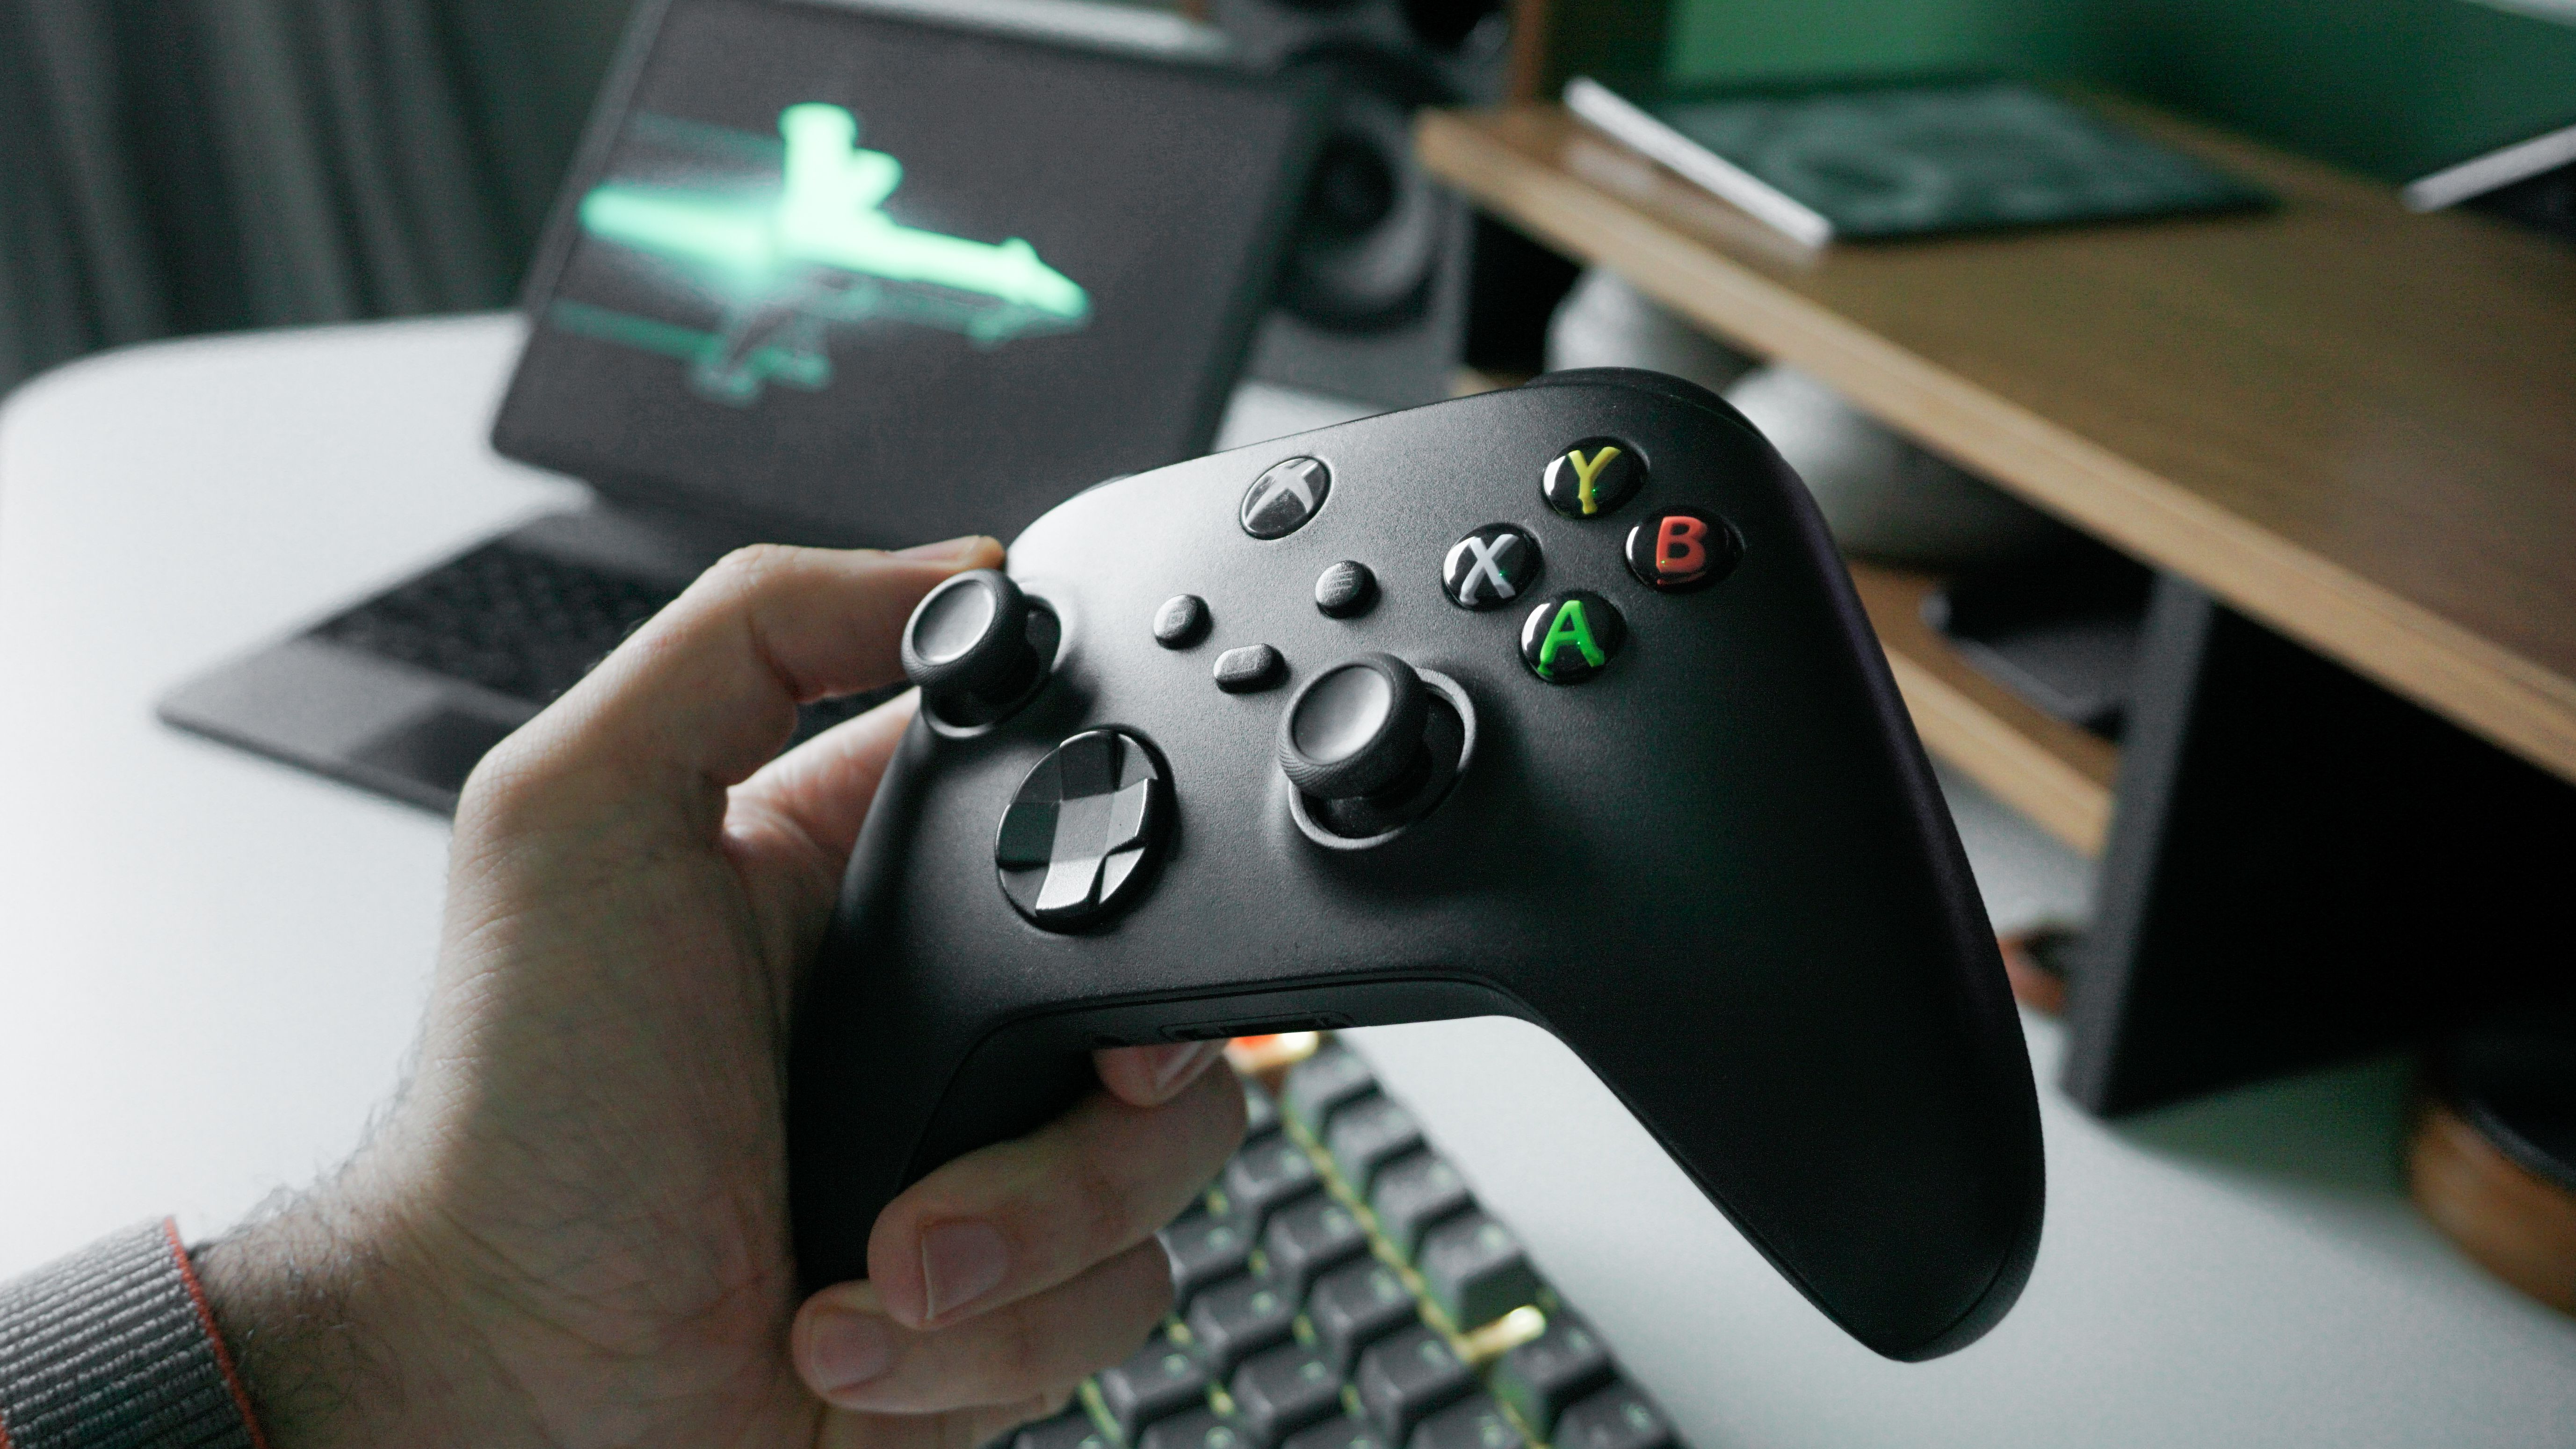 Como Jogar xbox na Tv sem Console - Xbox Cloud Gaming 